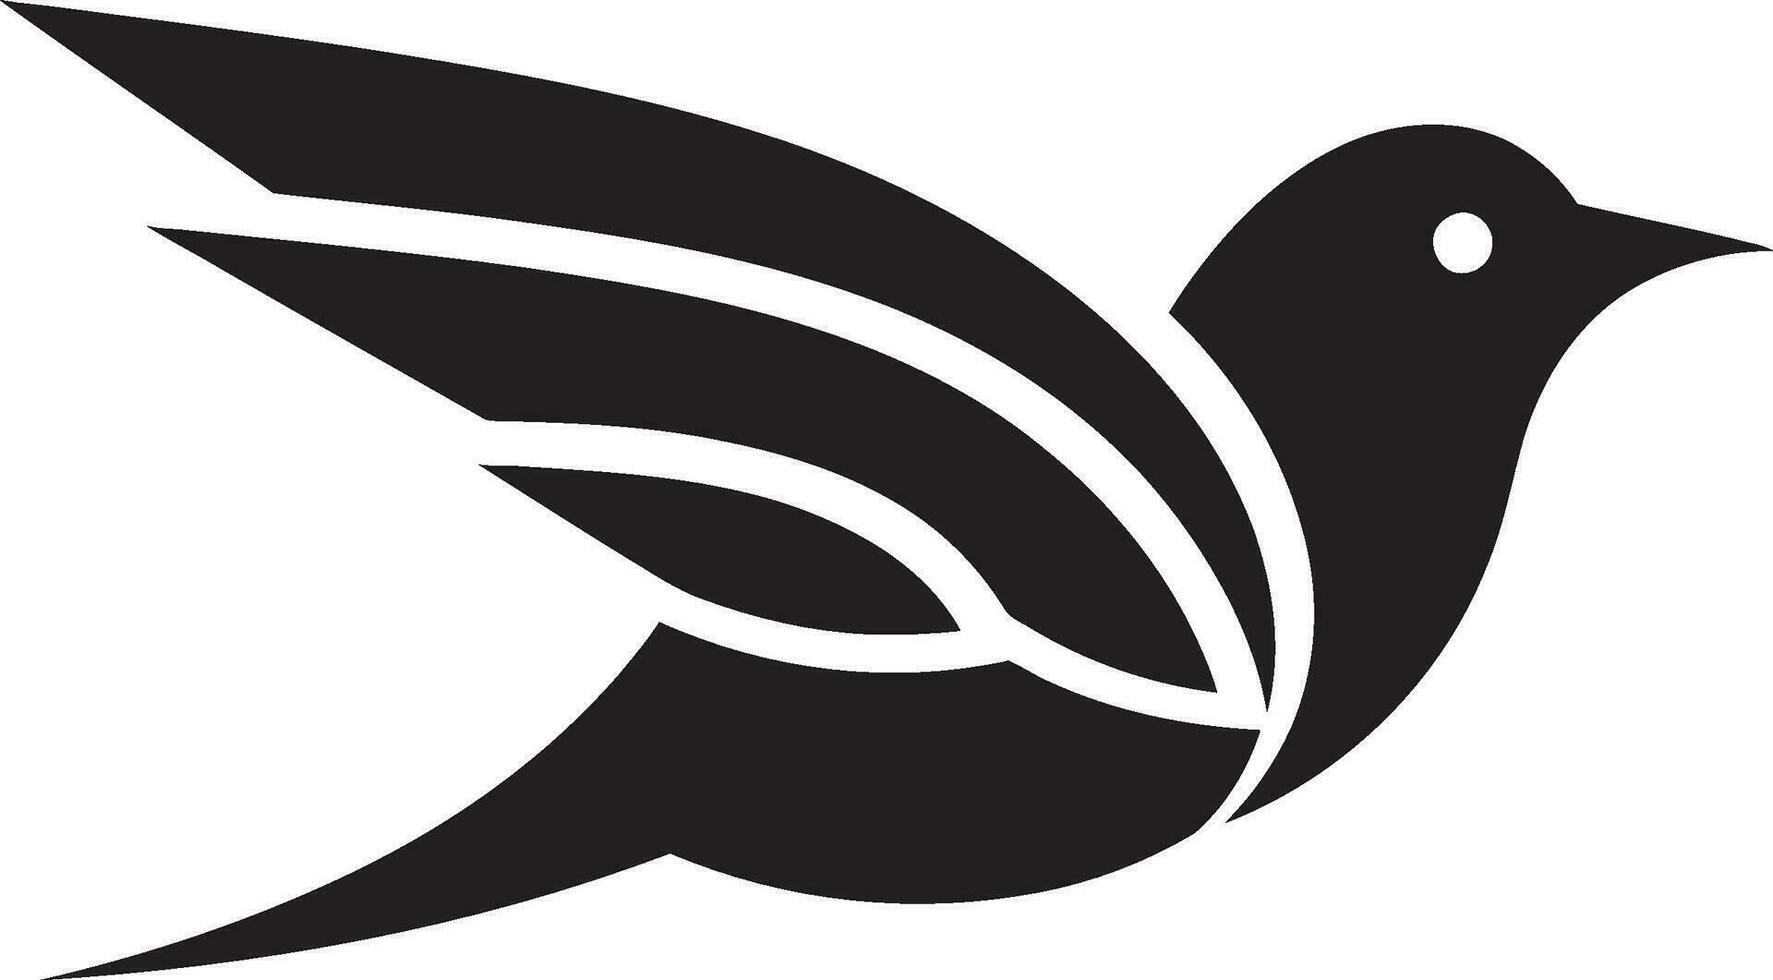 Elegant Sparrow Emblem Iconic Flight Sculpted Songbird Silhouette Feathered Wonder vector